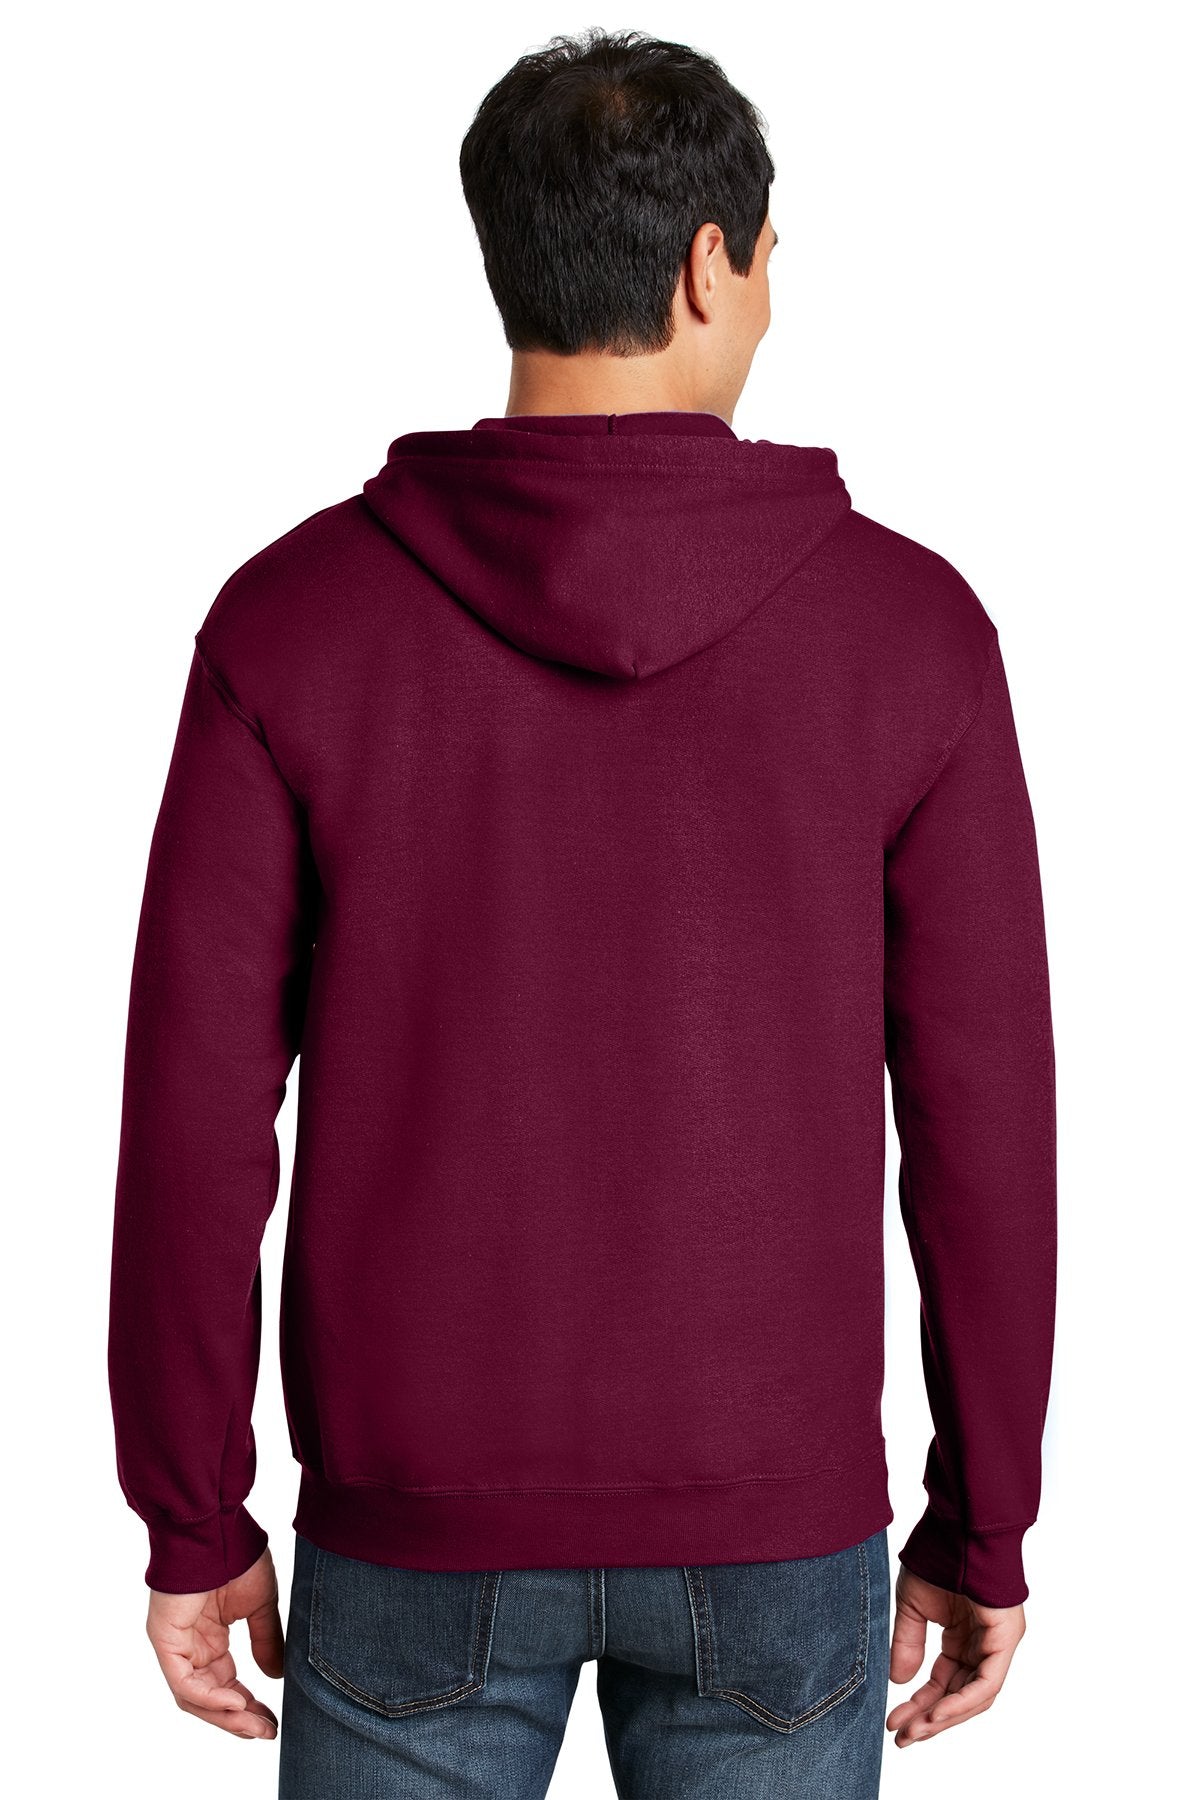 Gildan Heavy Blend Full Zip Hooded Sweatshirt Maroon